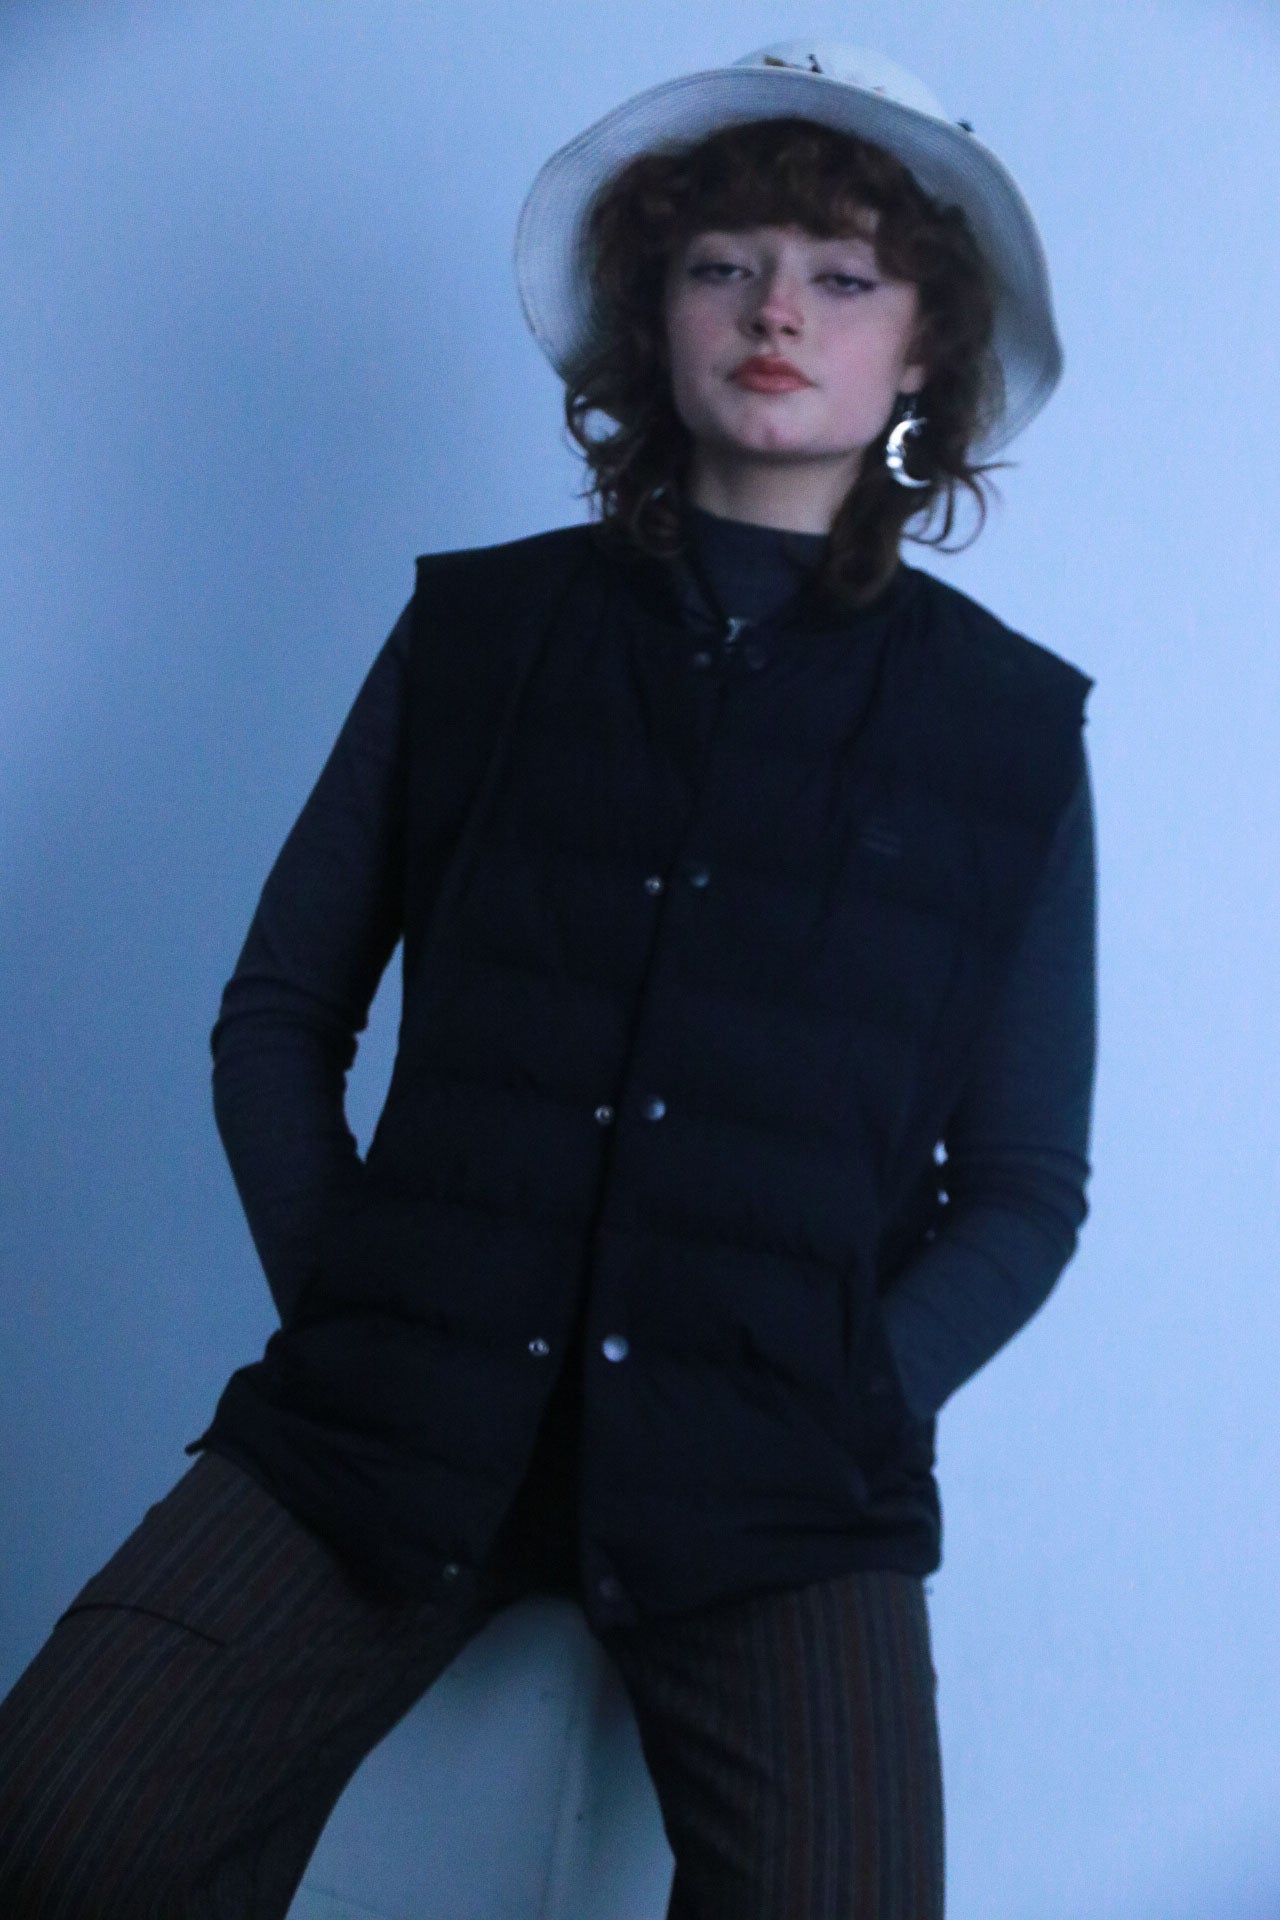 Rubynee Vintage puffed sleeveless black zip up jacket